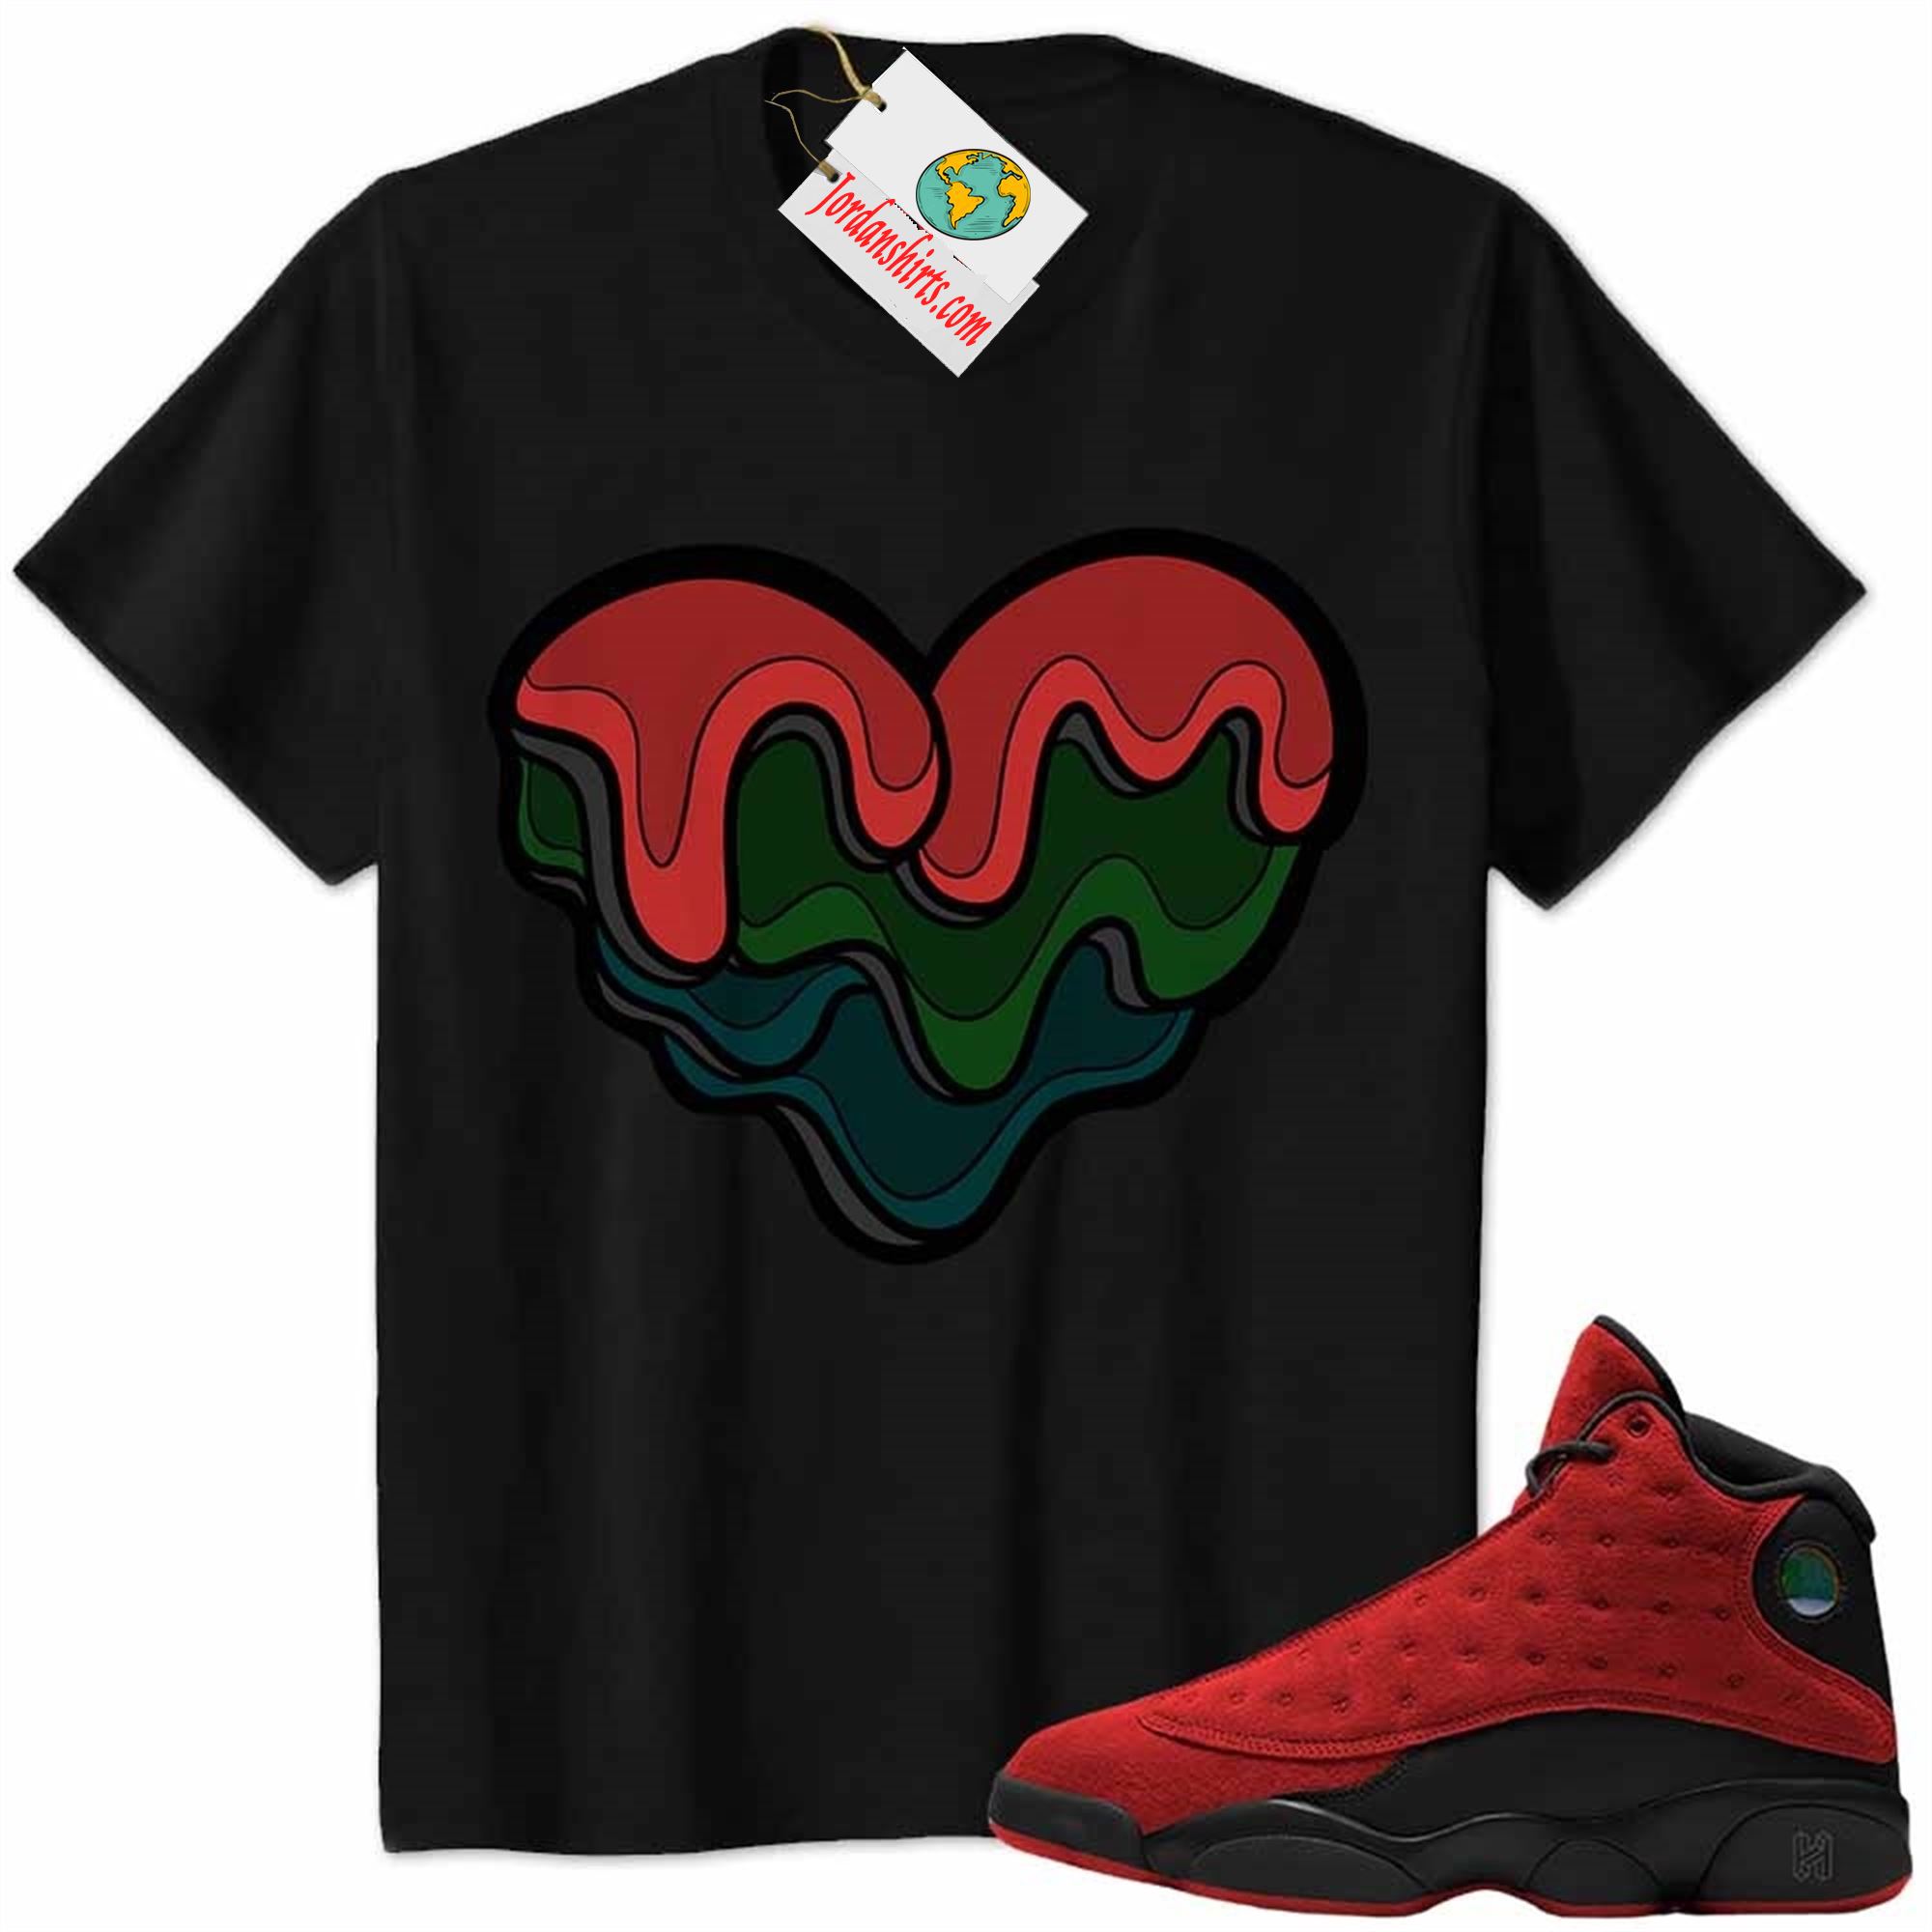 Jordan 13 Shirt, Melt Dripping Heart Black Air Jordan 13 Reverse Bred 13s Plus Size Up To 5xl